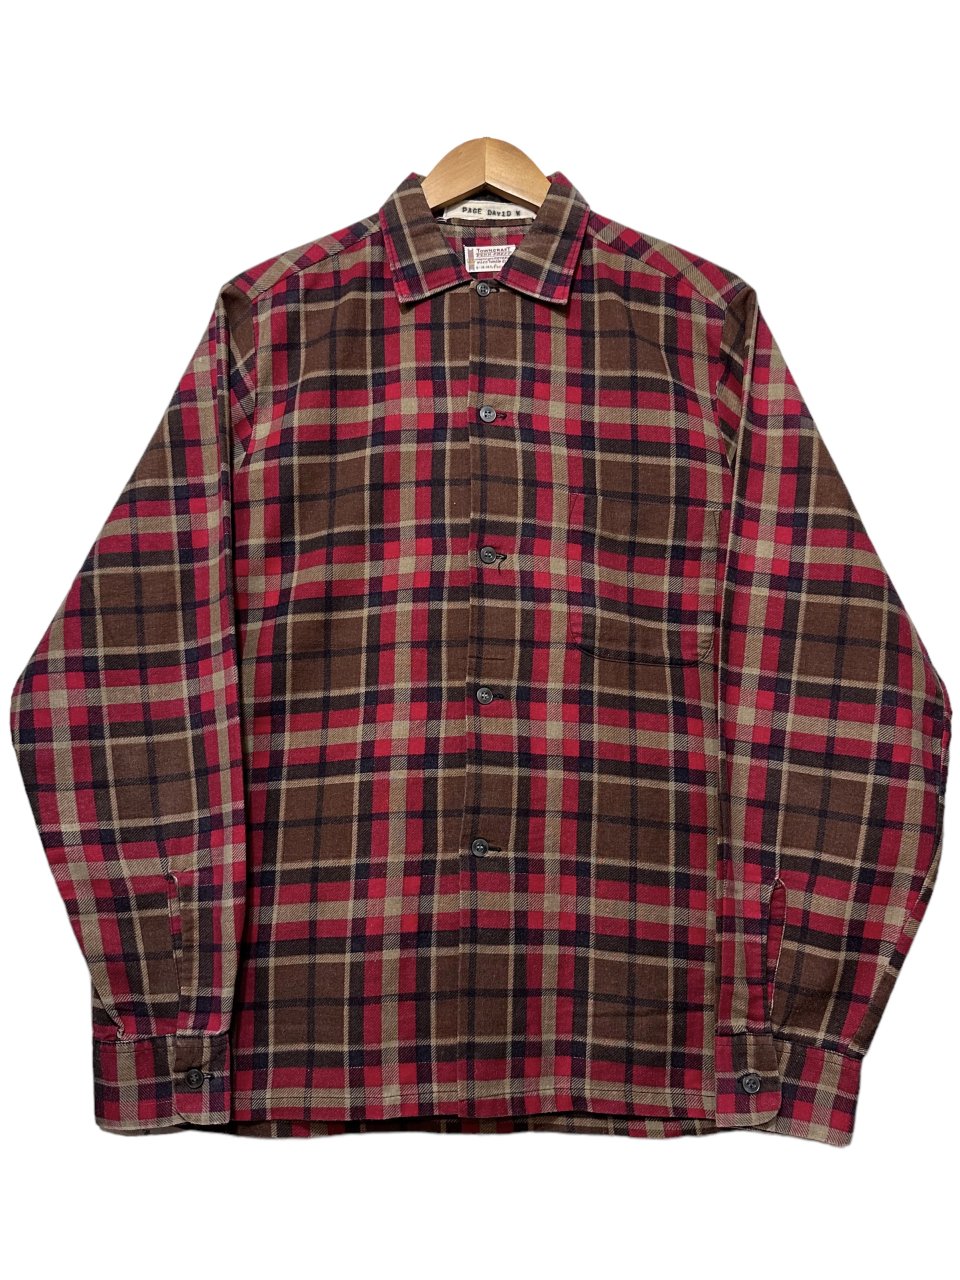 60s~70s TOWNCRAFT Print Flannel L/S Shirt 赤茶黒 S タウンクラフト 長袖 プリントネルシャツ  チェックシャツ PENNY'S ペニーズ - NEWJOKE ONLINE STORE